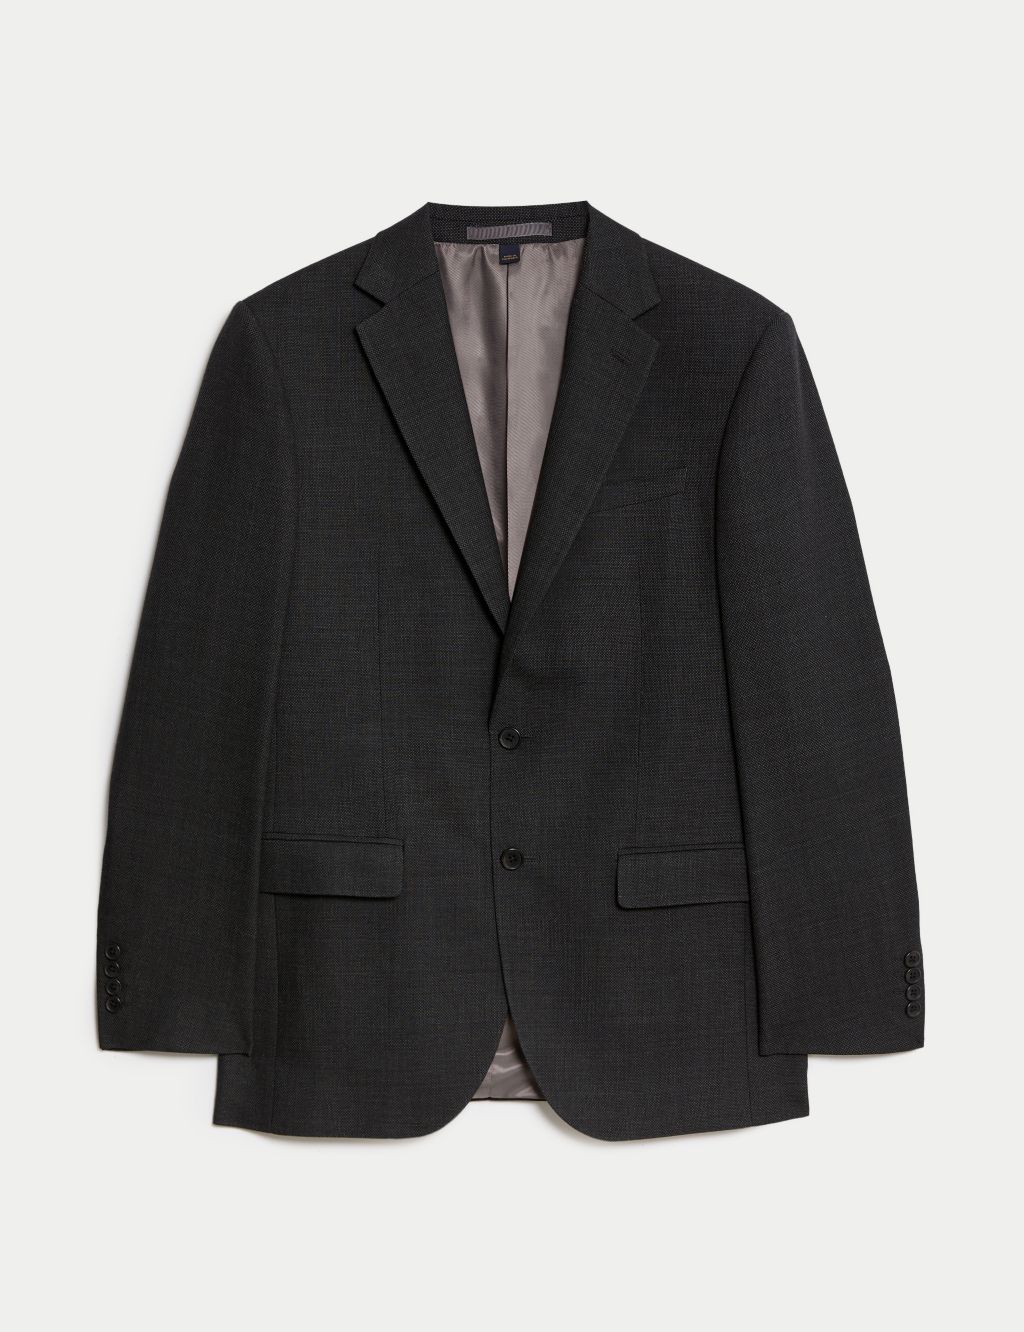 Regular Fit Pure Wool Suit Jacket image 1